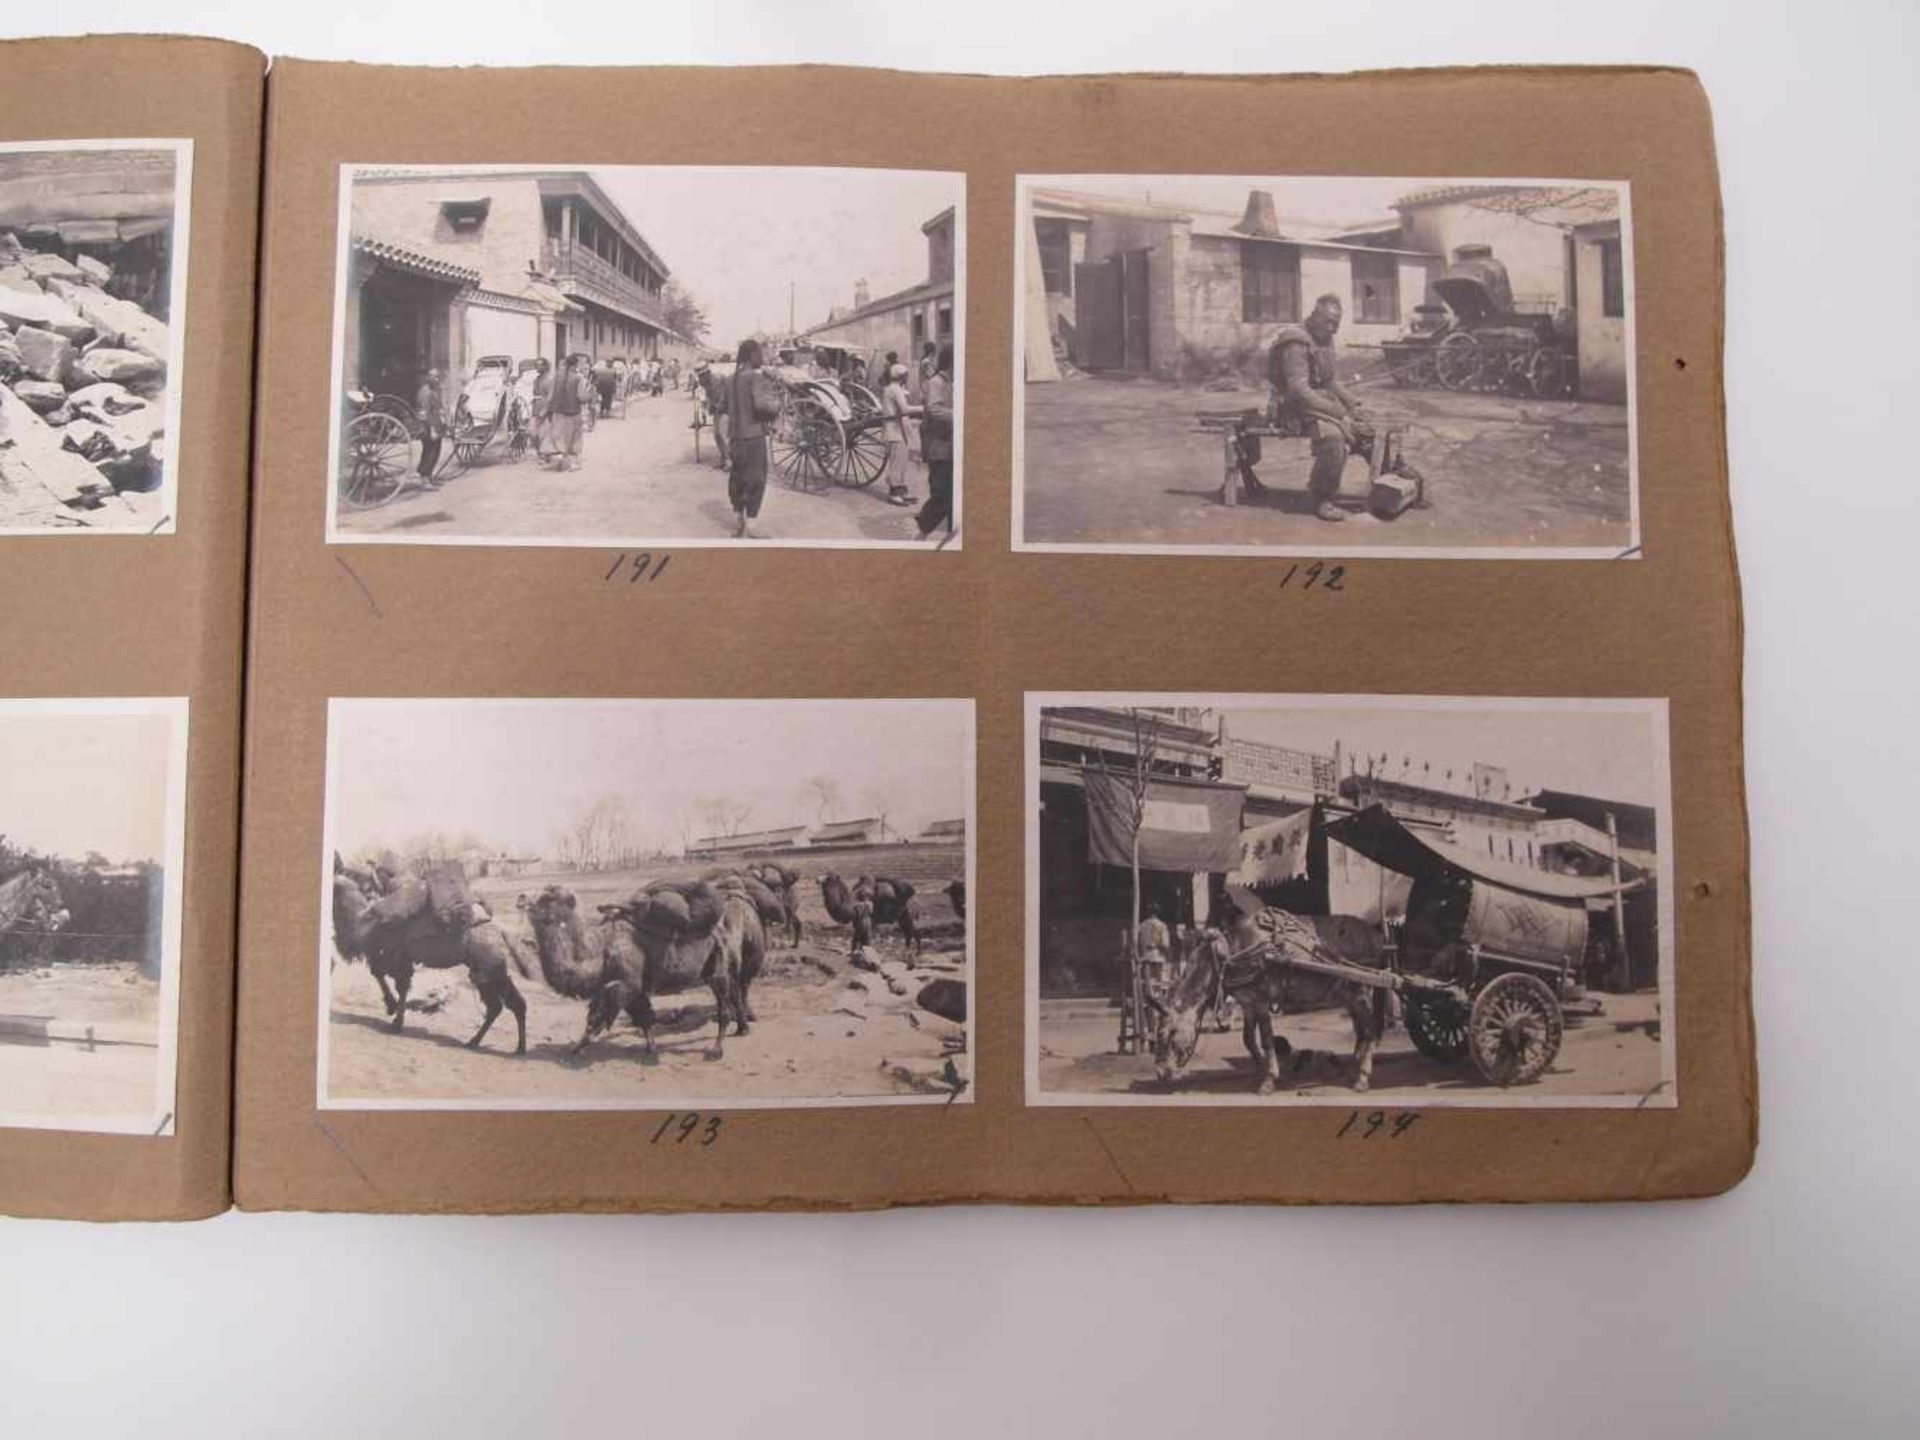 GROßES FOTOALBUM "TYPE AND STREET SCENES". China. Um 1900. Braunes Album mit 103 Fotos in - Bild 21 aus 26